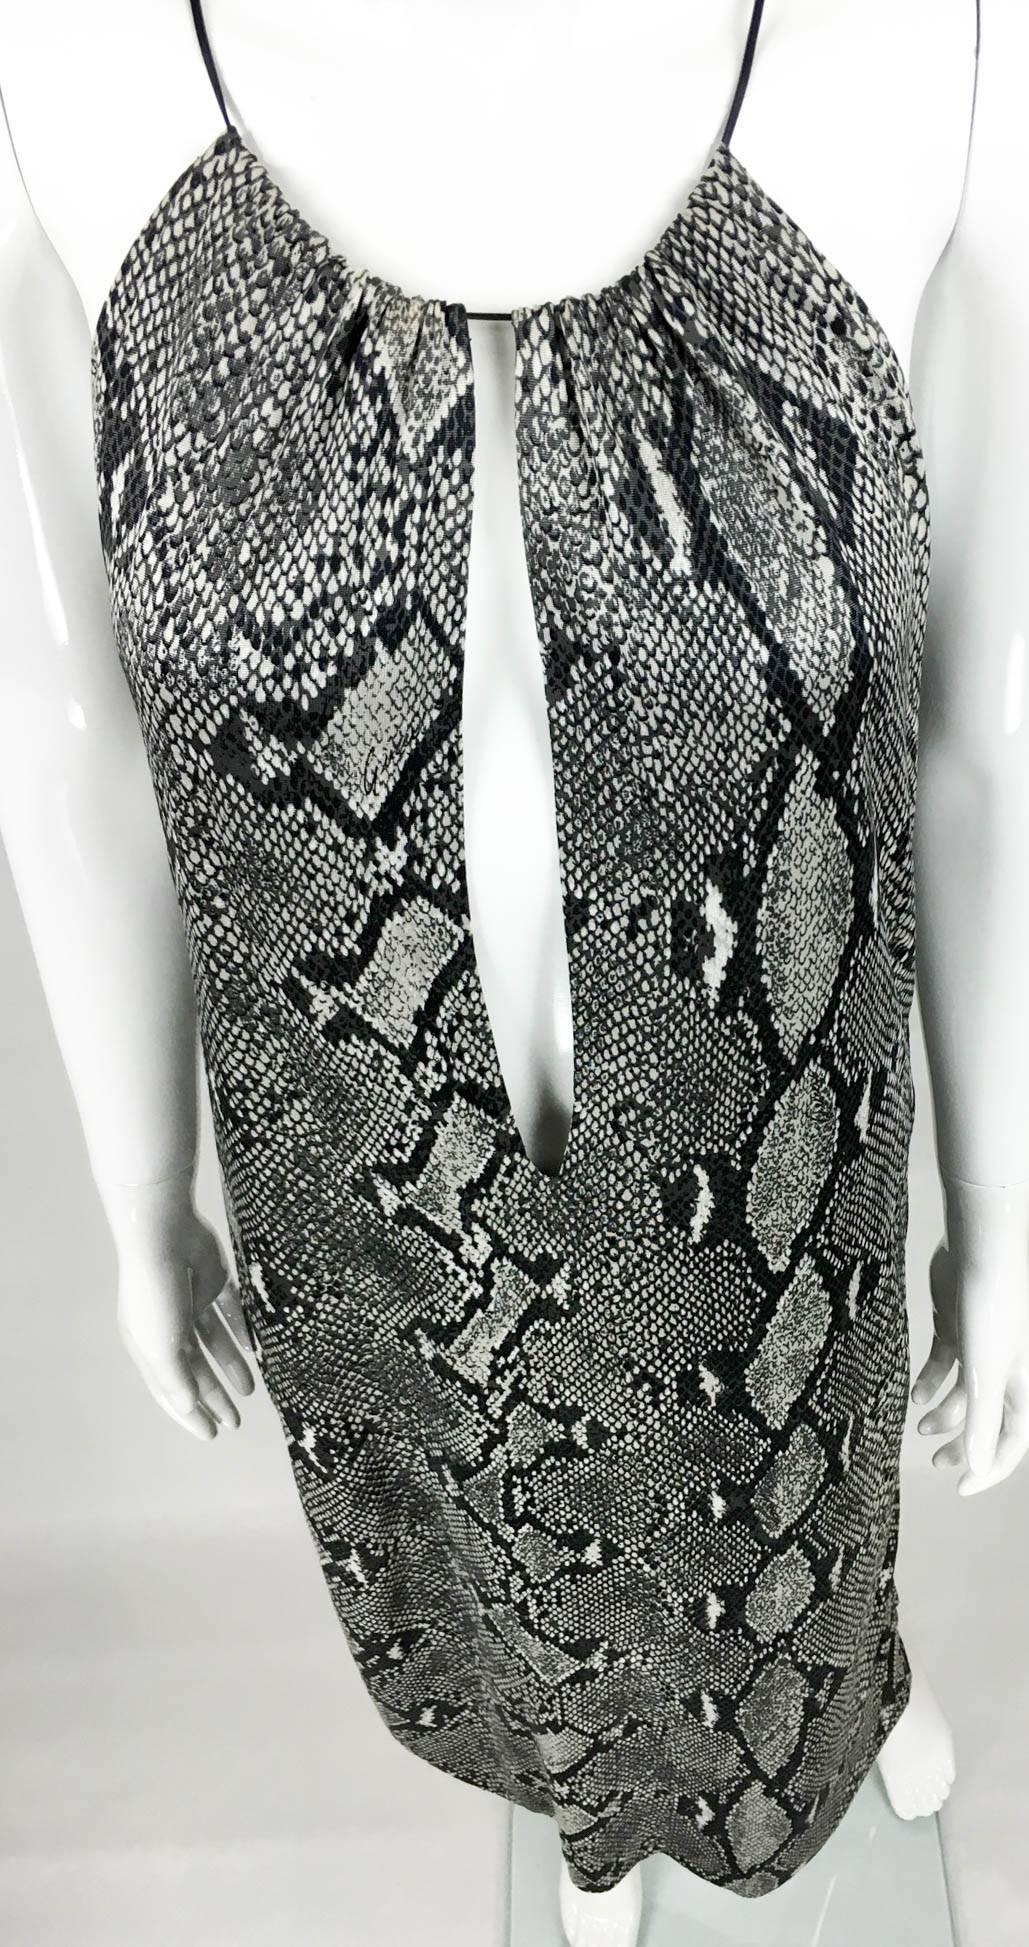 Gucci by Tom Ford Runway Python Print Dress - Circa 2000 For Sale 1